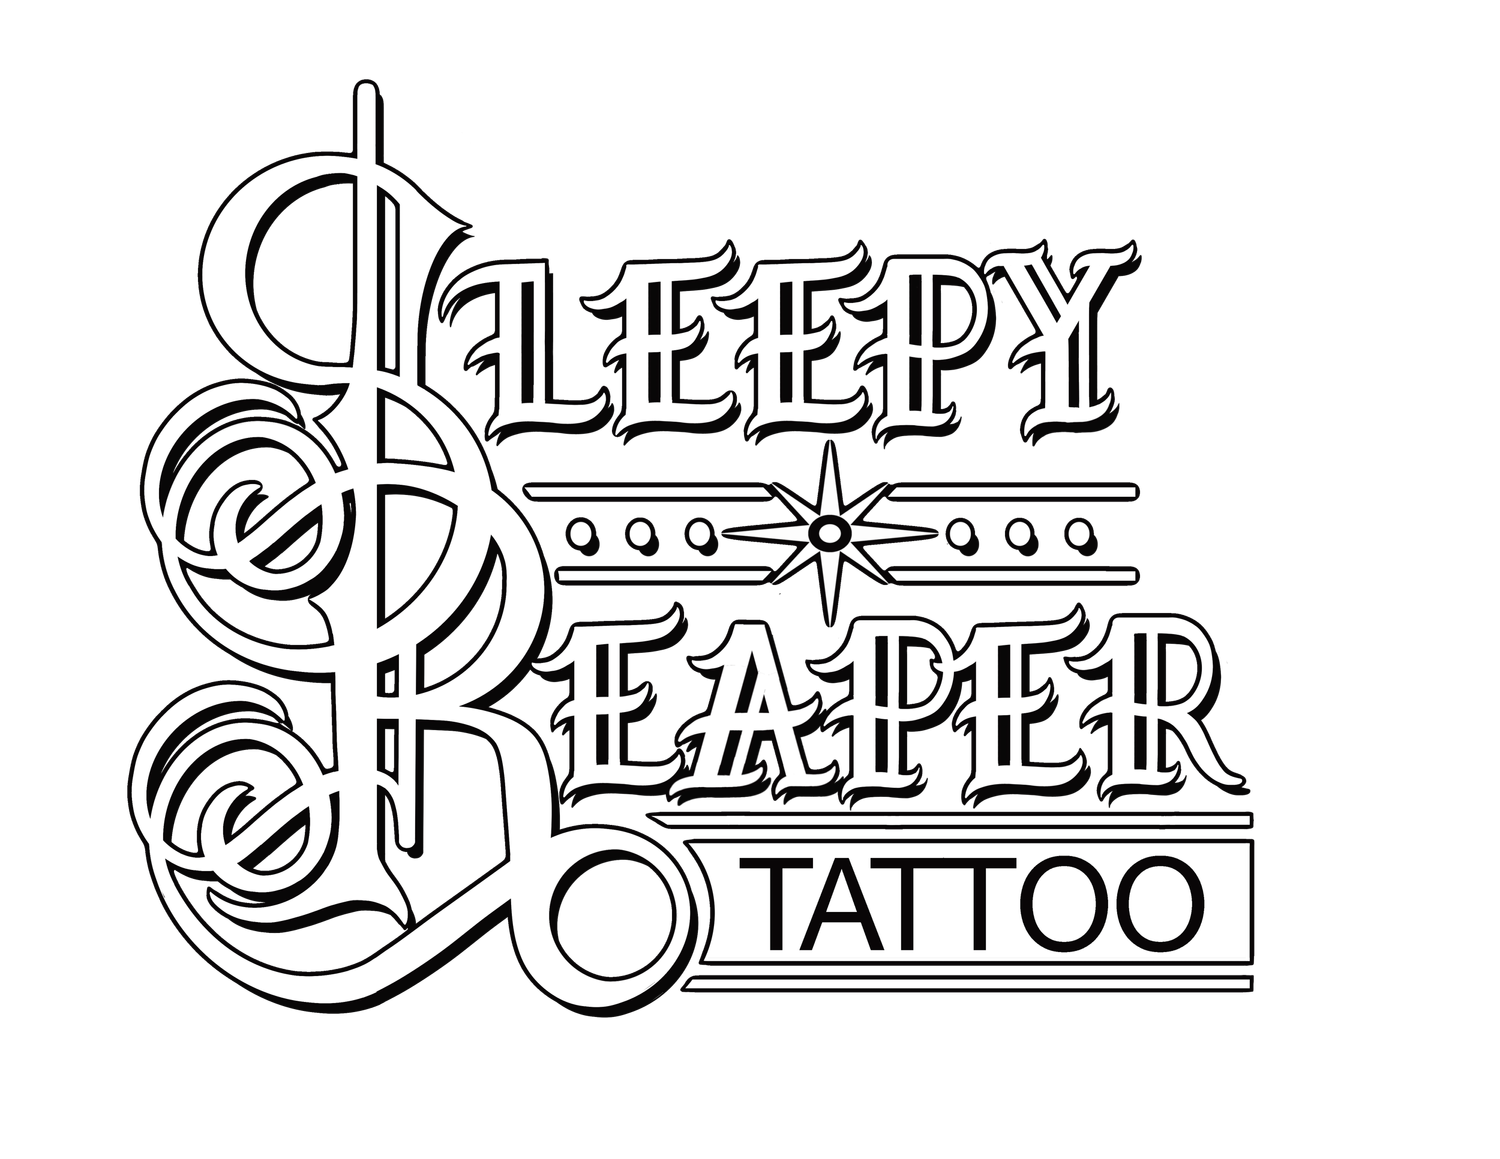 Sleepy Reaper Tattoo